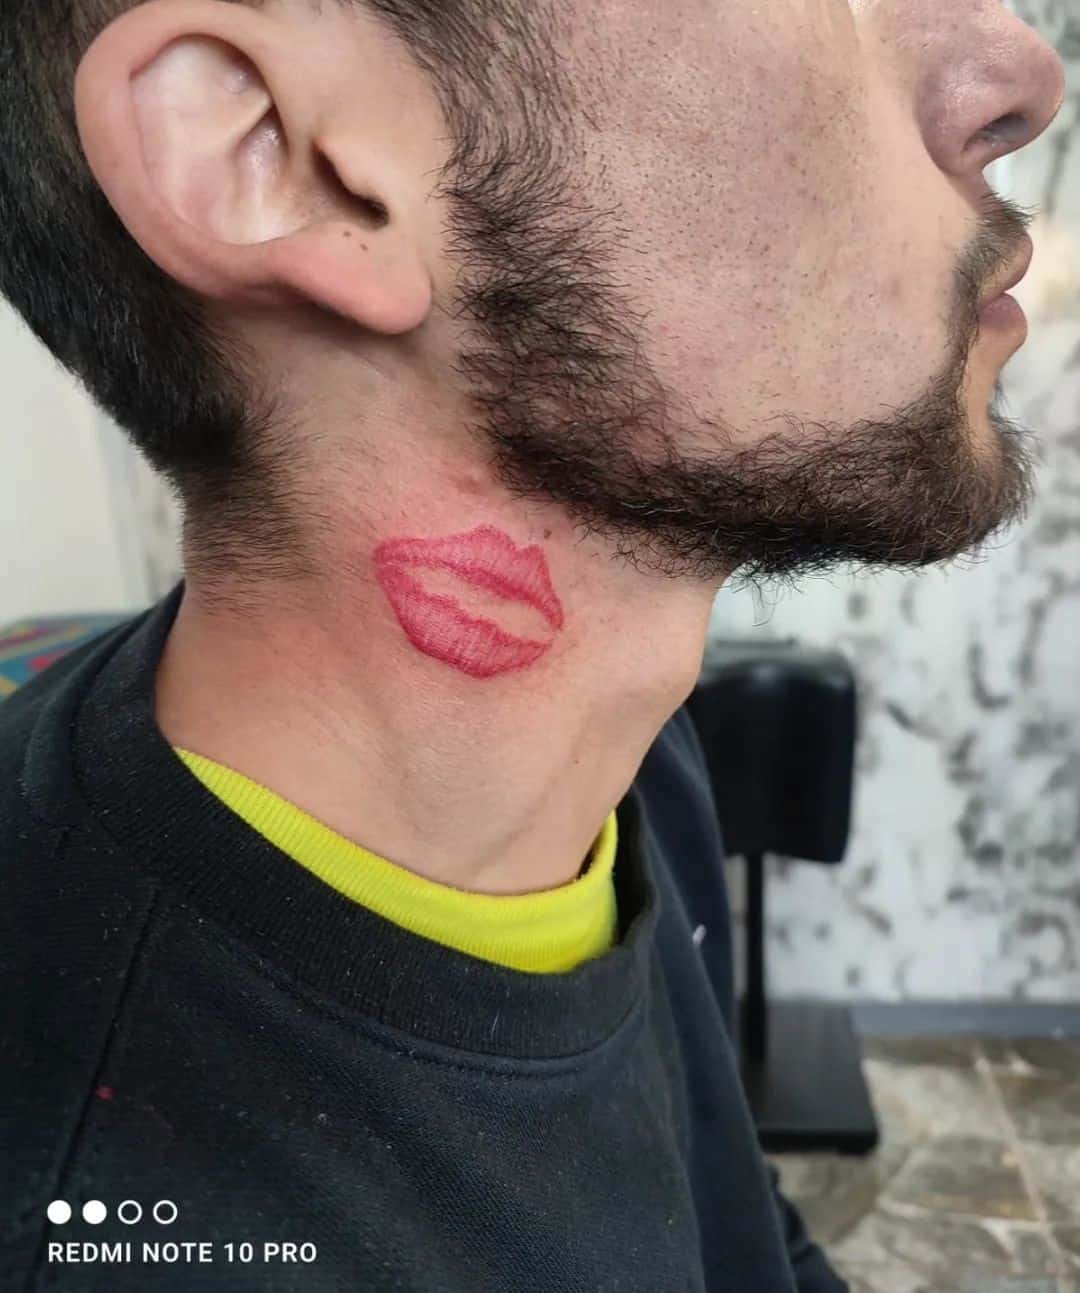 Lips Tattoo on The Neck men